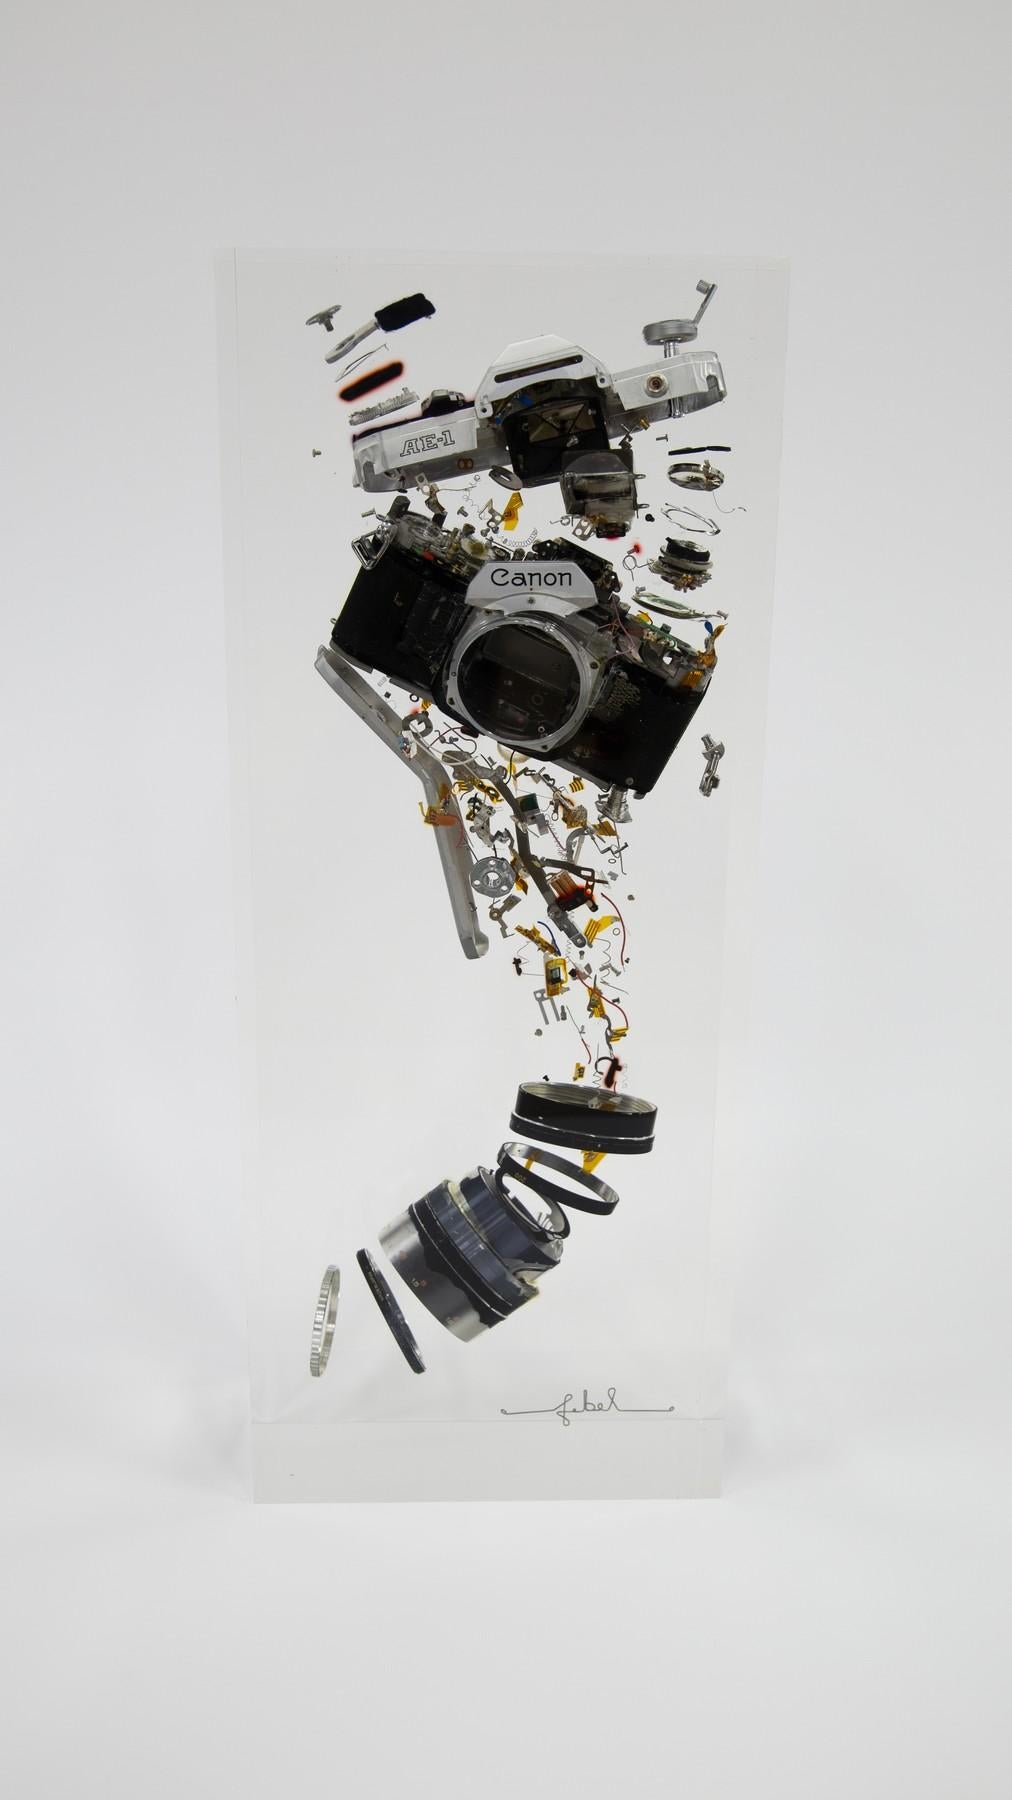 Canon AE1 - Mixed Media Art by Francois Bel